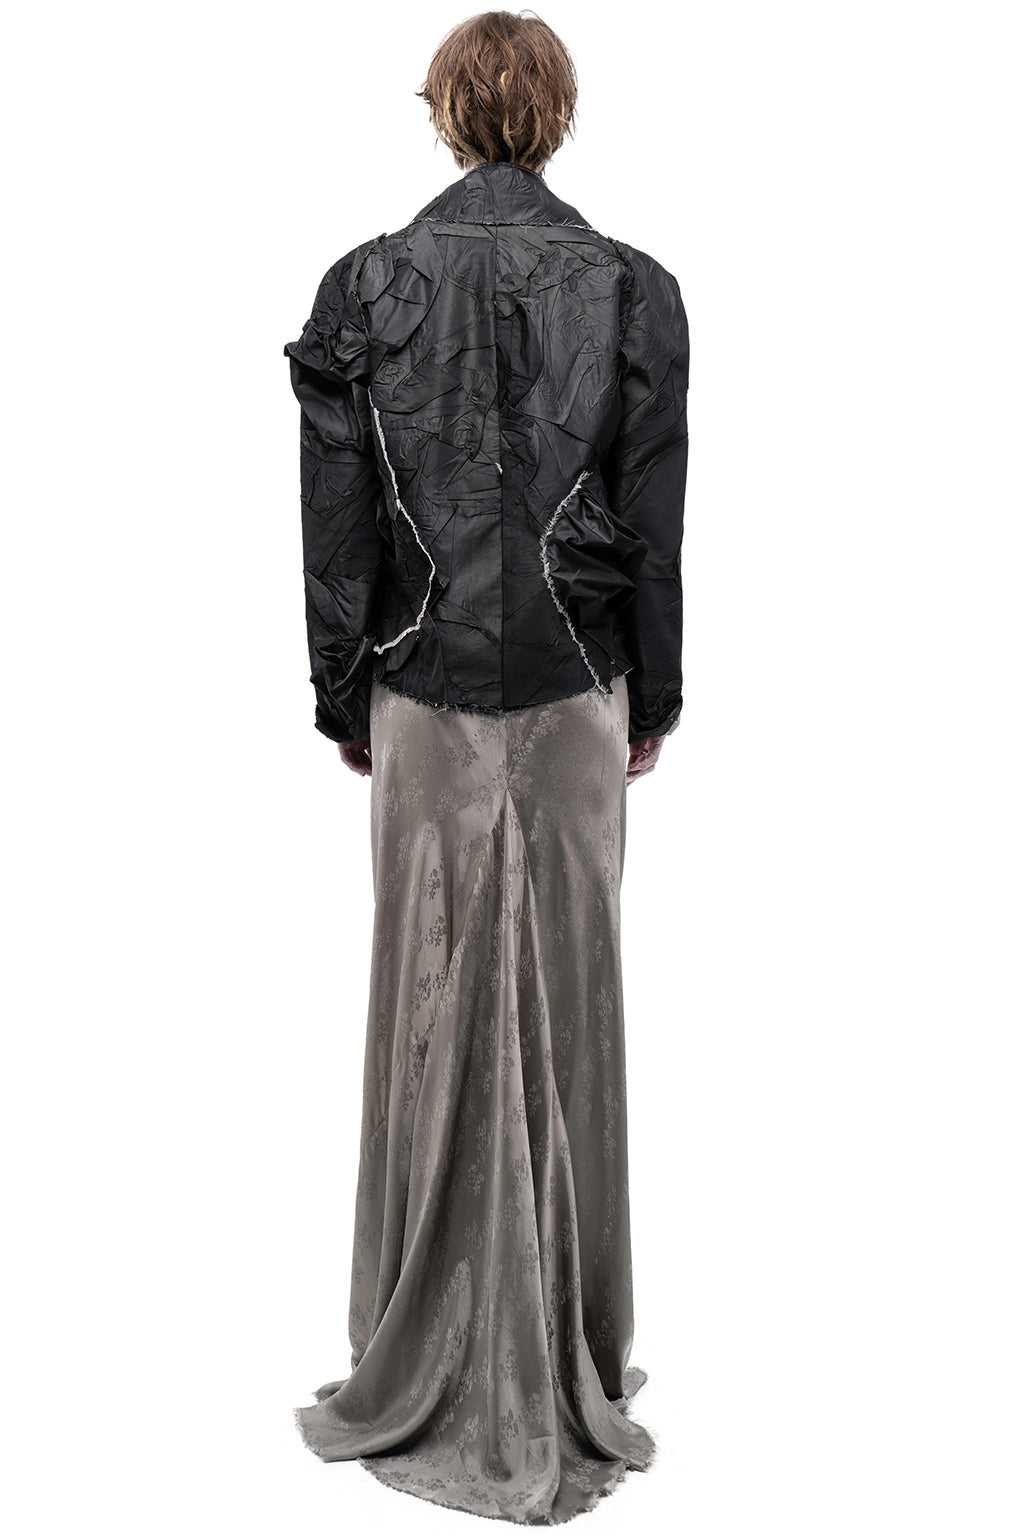 MASHAT -Floral Silver Skirt, buy at doors. nyc